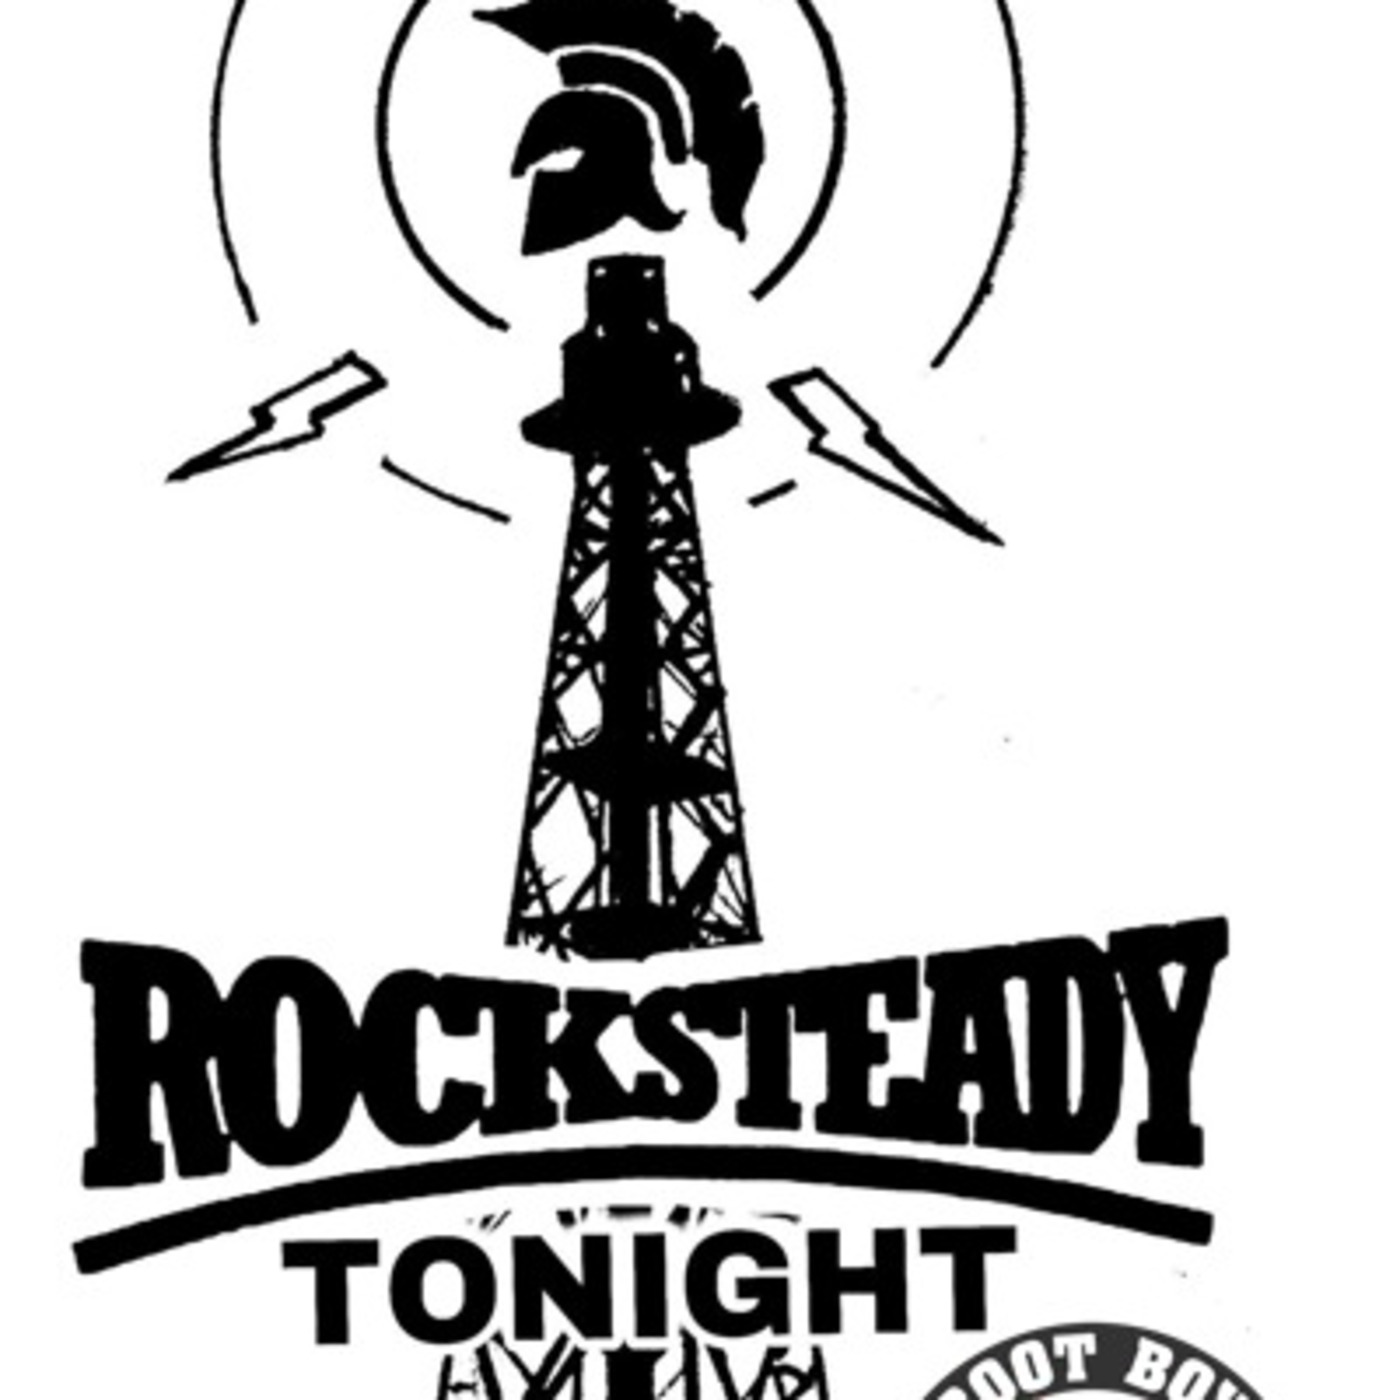 Episode 3058: Rocksteady Tonight With Phil Duckworth Episode 83 29th Jan 2023 On www.bootboyradio.net